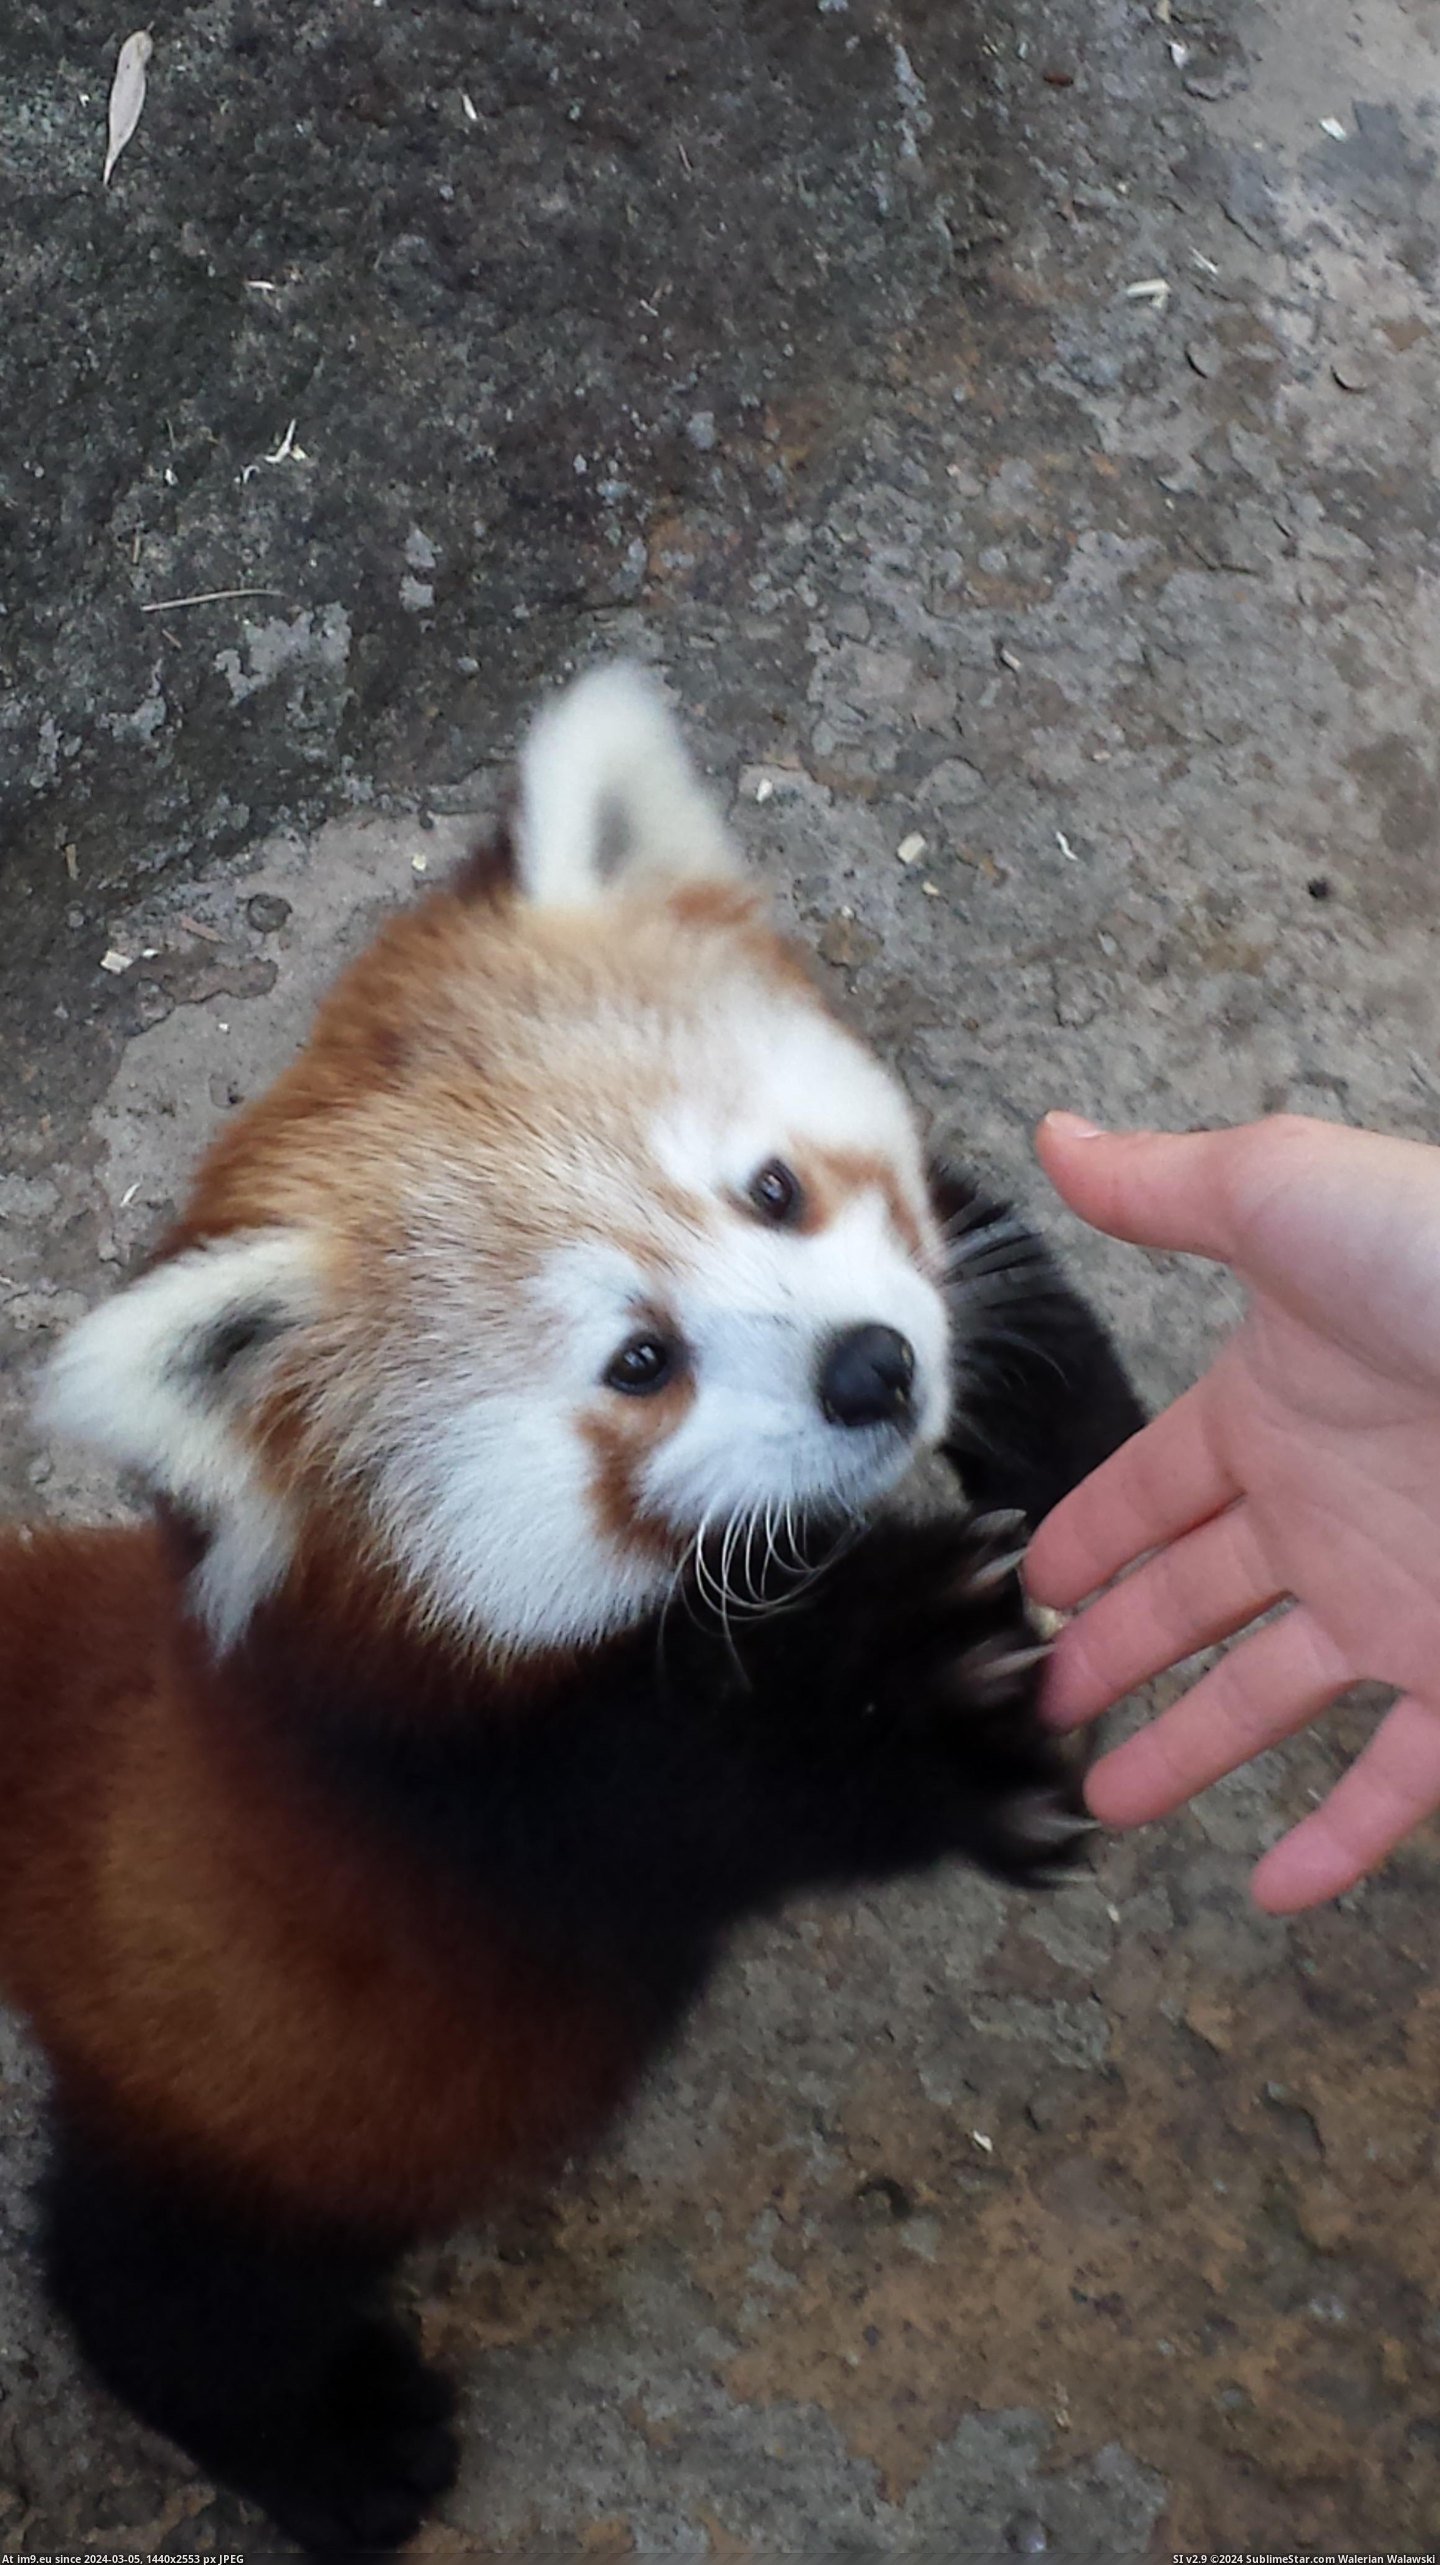 #Red #Girlfriend #Zoo #Panda #Shake #Got #Hands [Aww] My girlfriend got to shake hands with a red panda at the zoo! Pic. (Obraz z album My r/AWW favs))